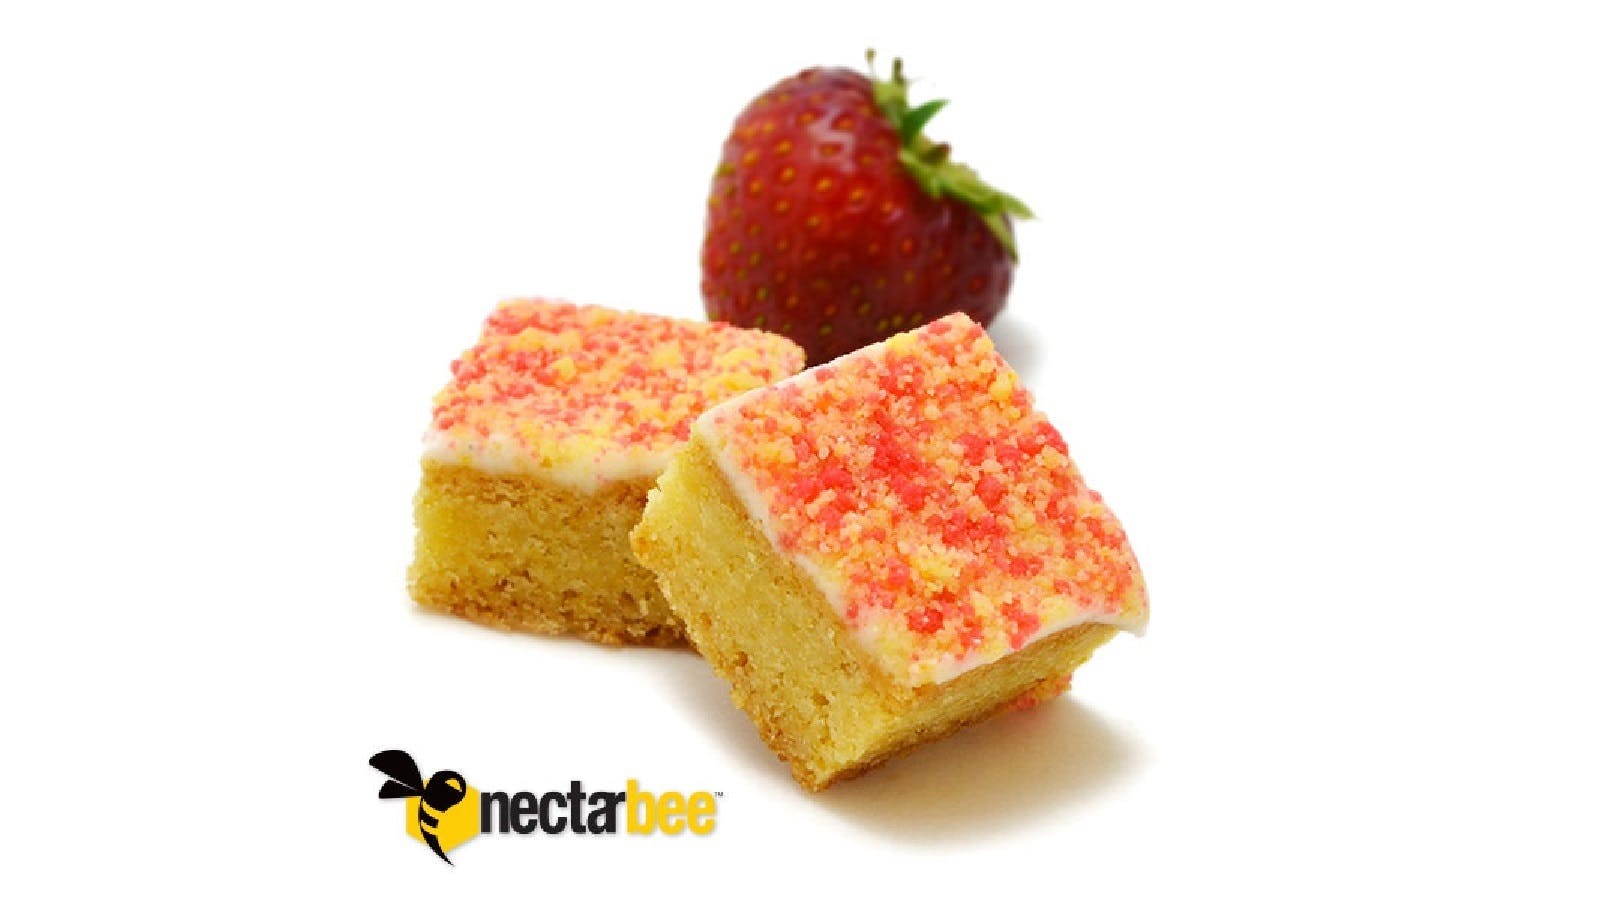 edible-nectarbee-strawberry-shortcake-40mg